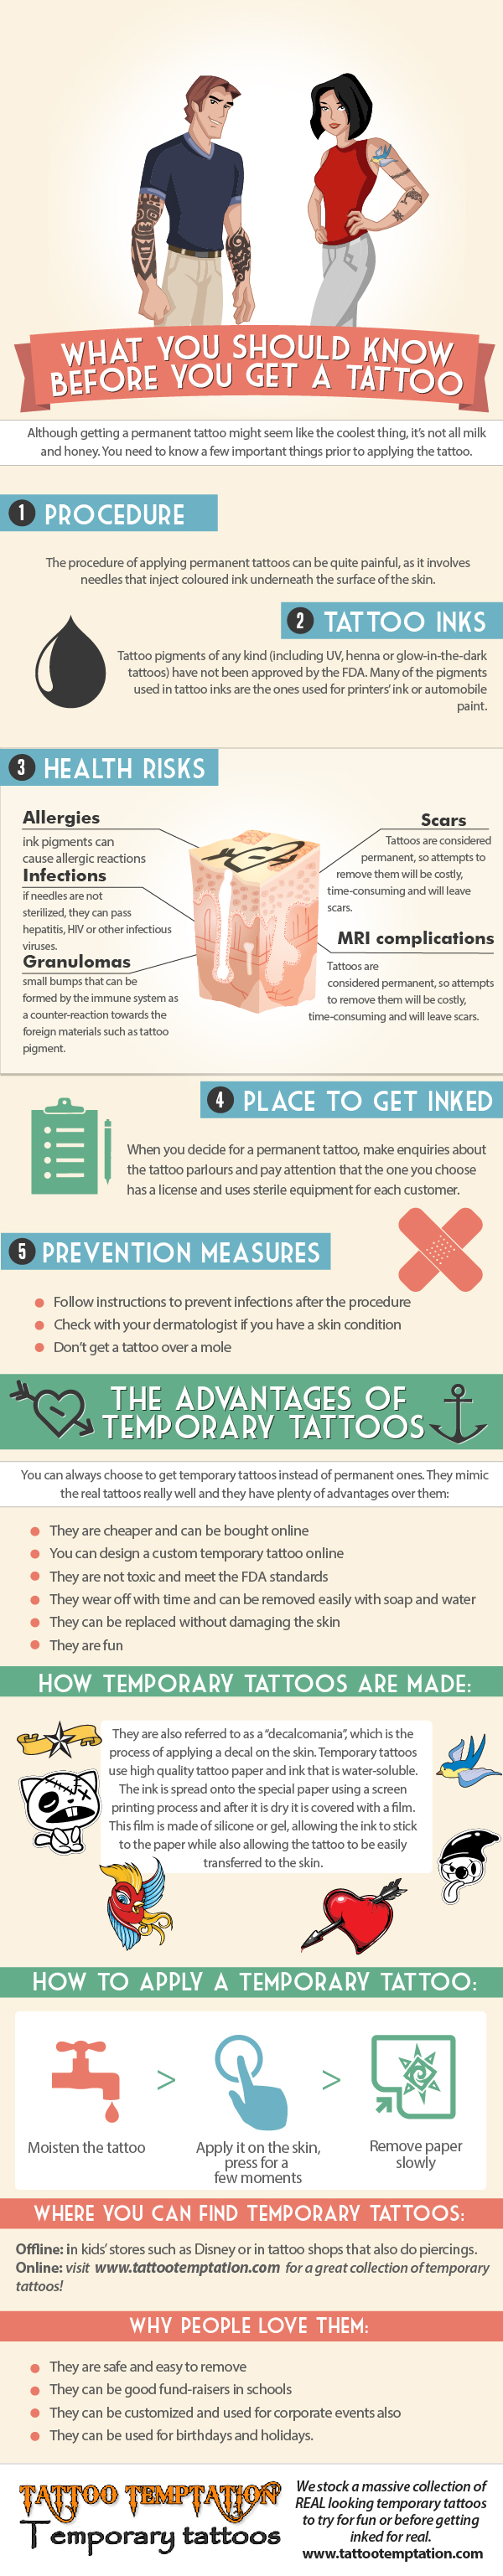 02 Tattoo-Infographic-web-resolution-01